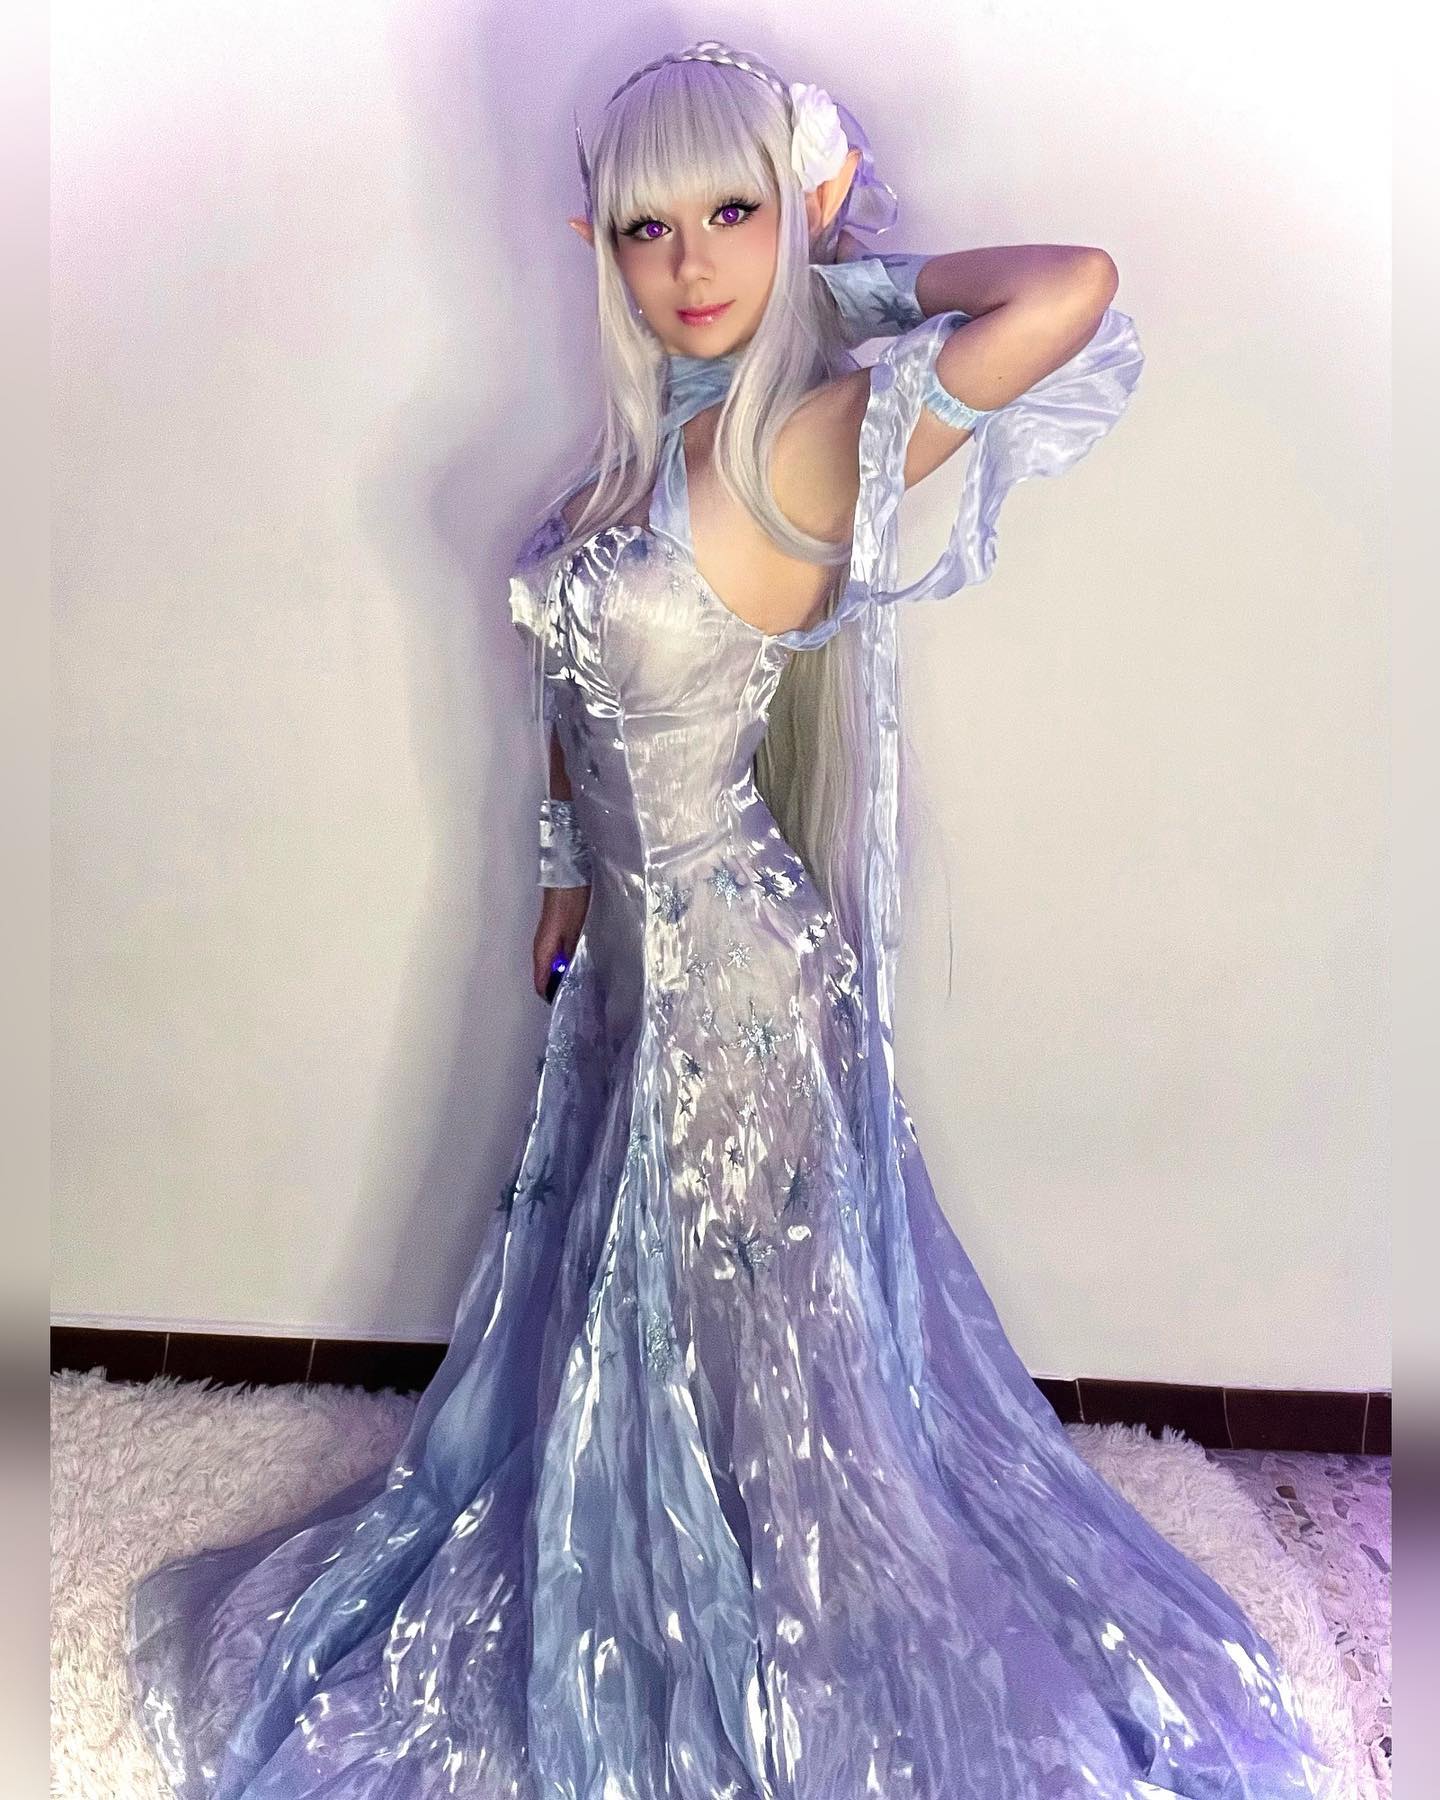 Belo cosplay da Emilia com vestido, de Re Zero - Haiku-chan 01